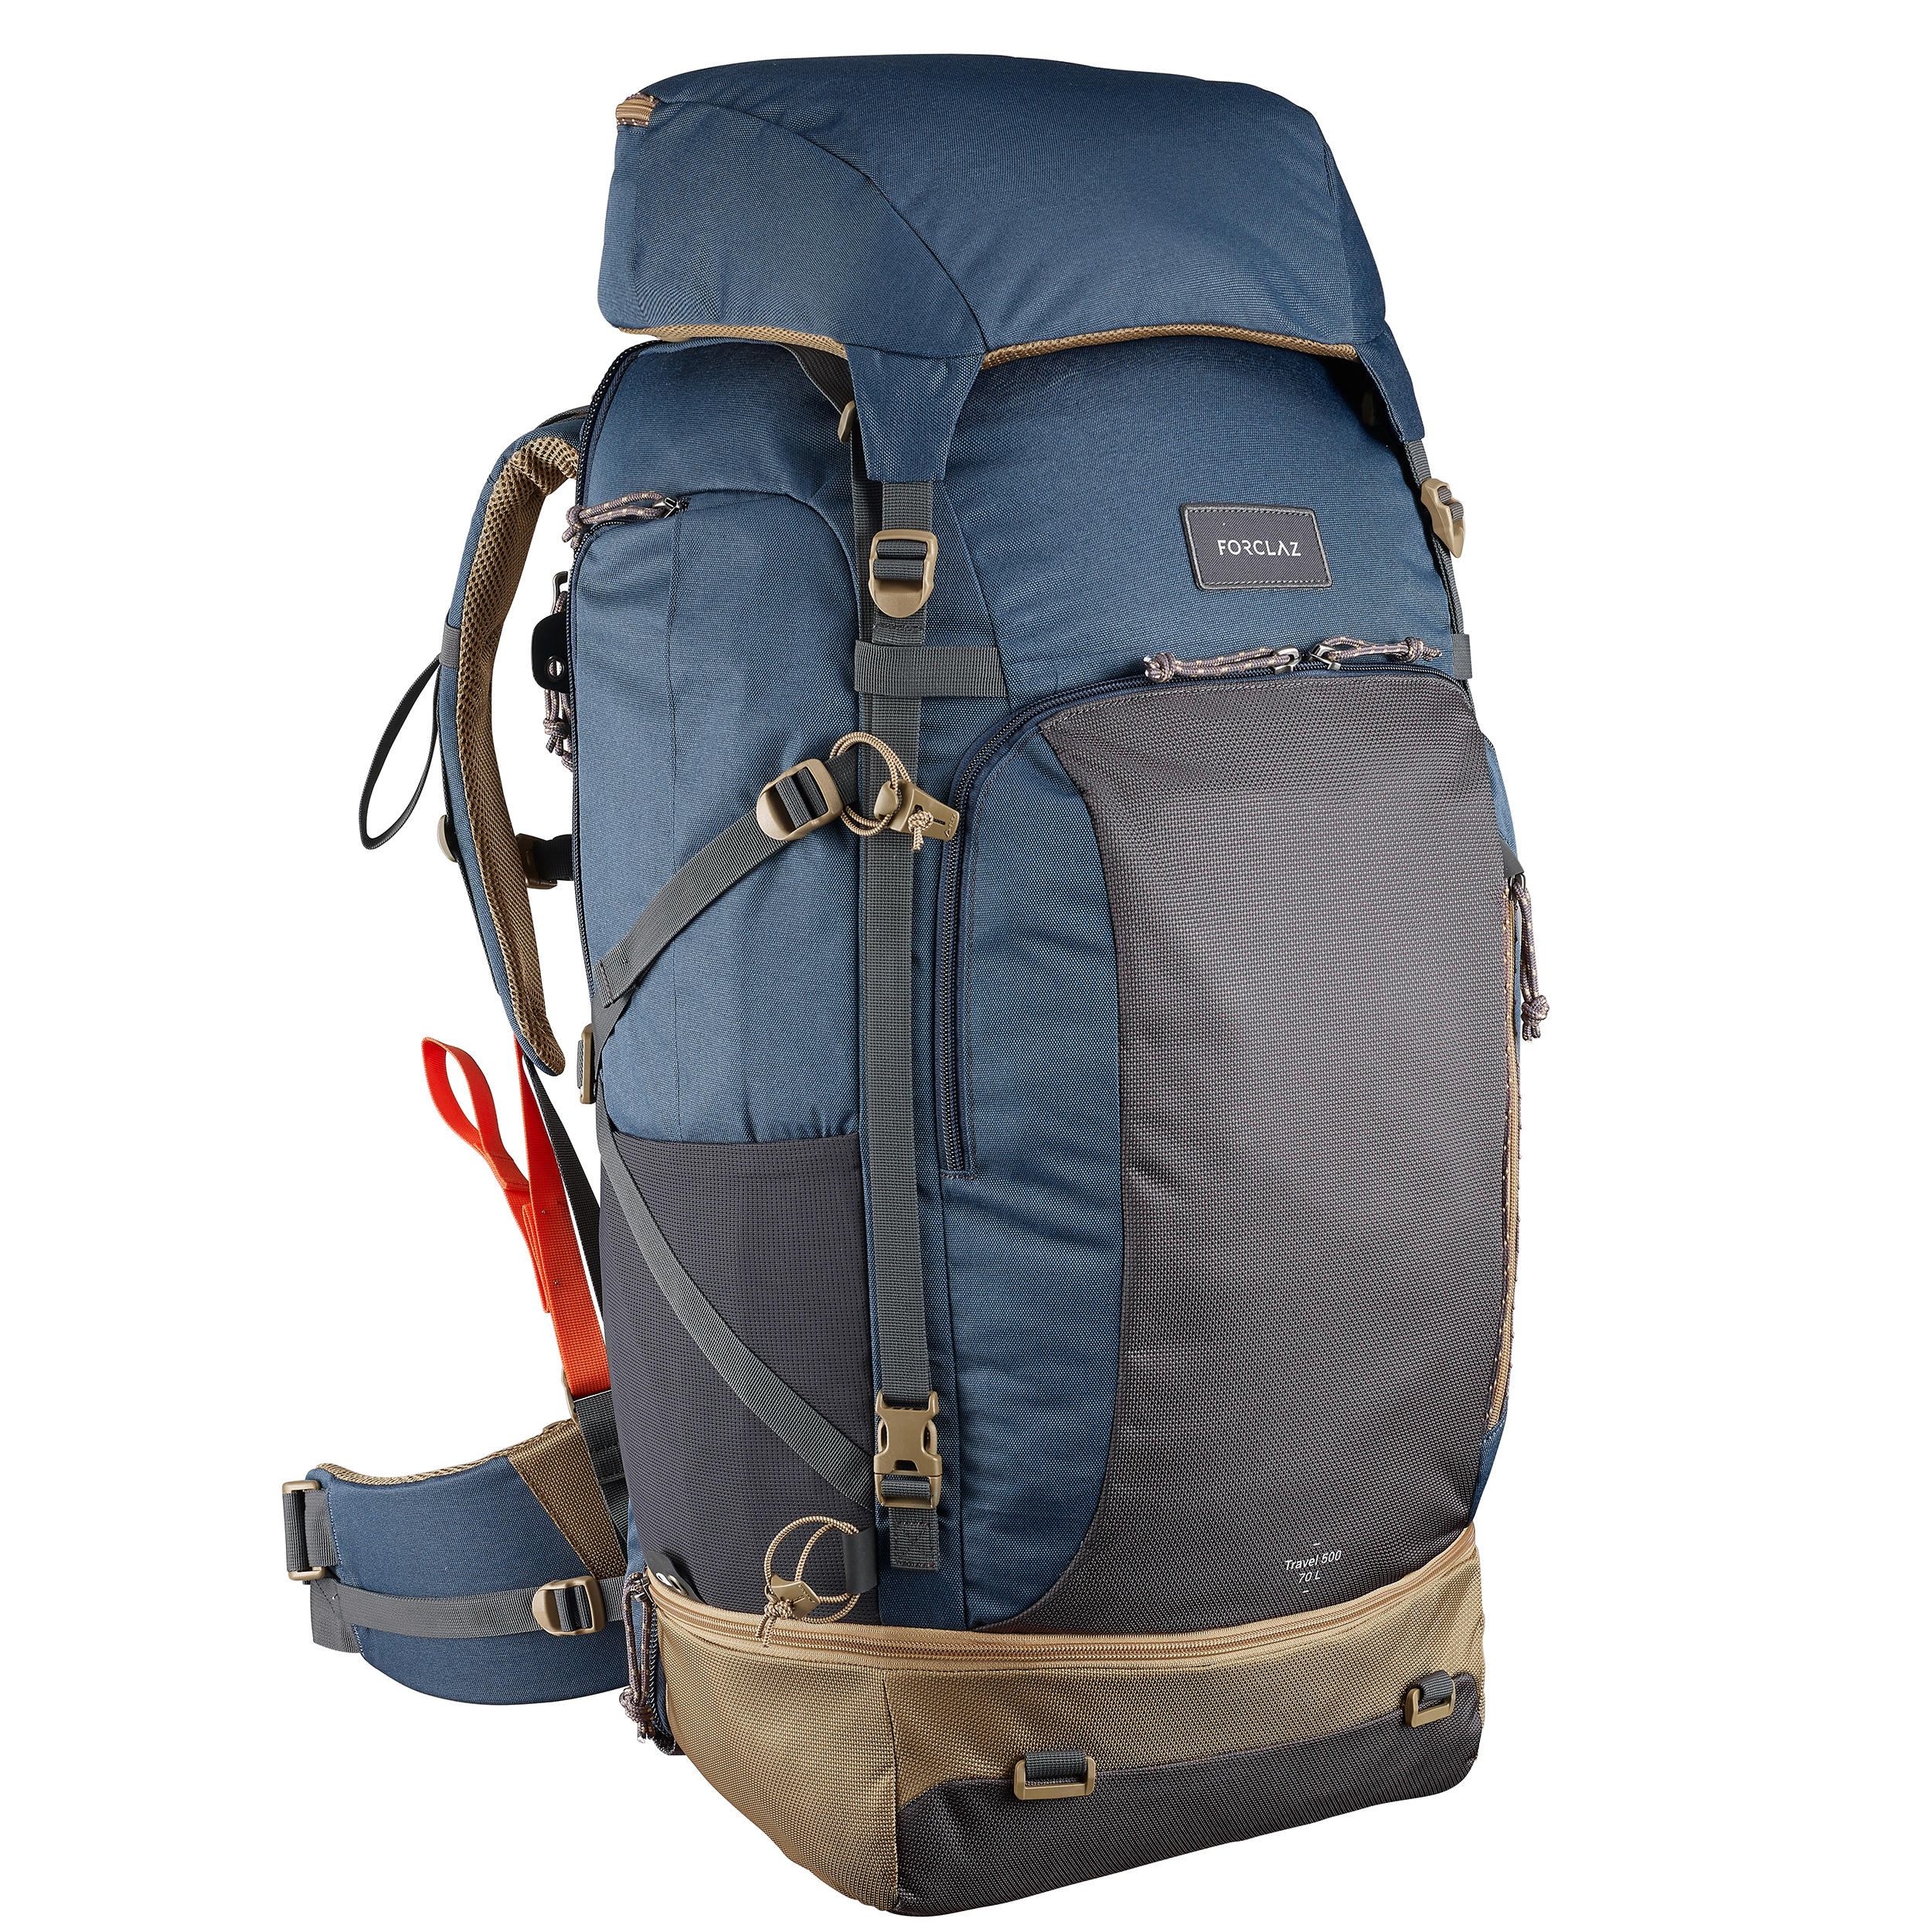 bleu hiking lightweight travel rucksack backpack